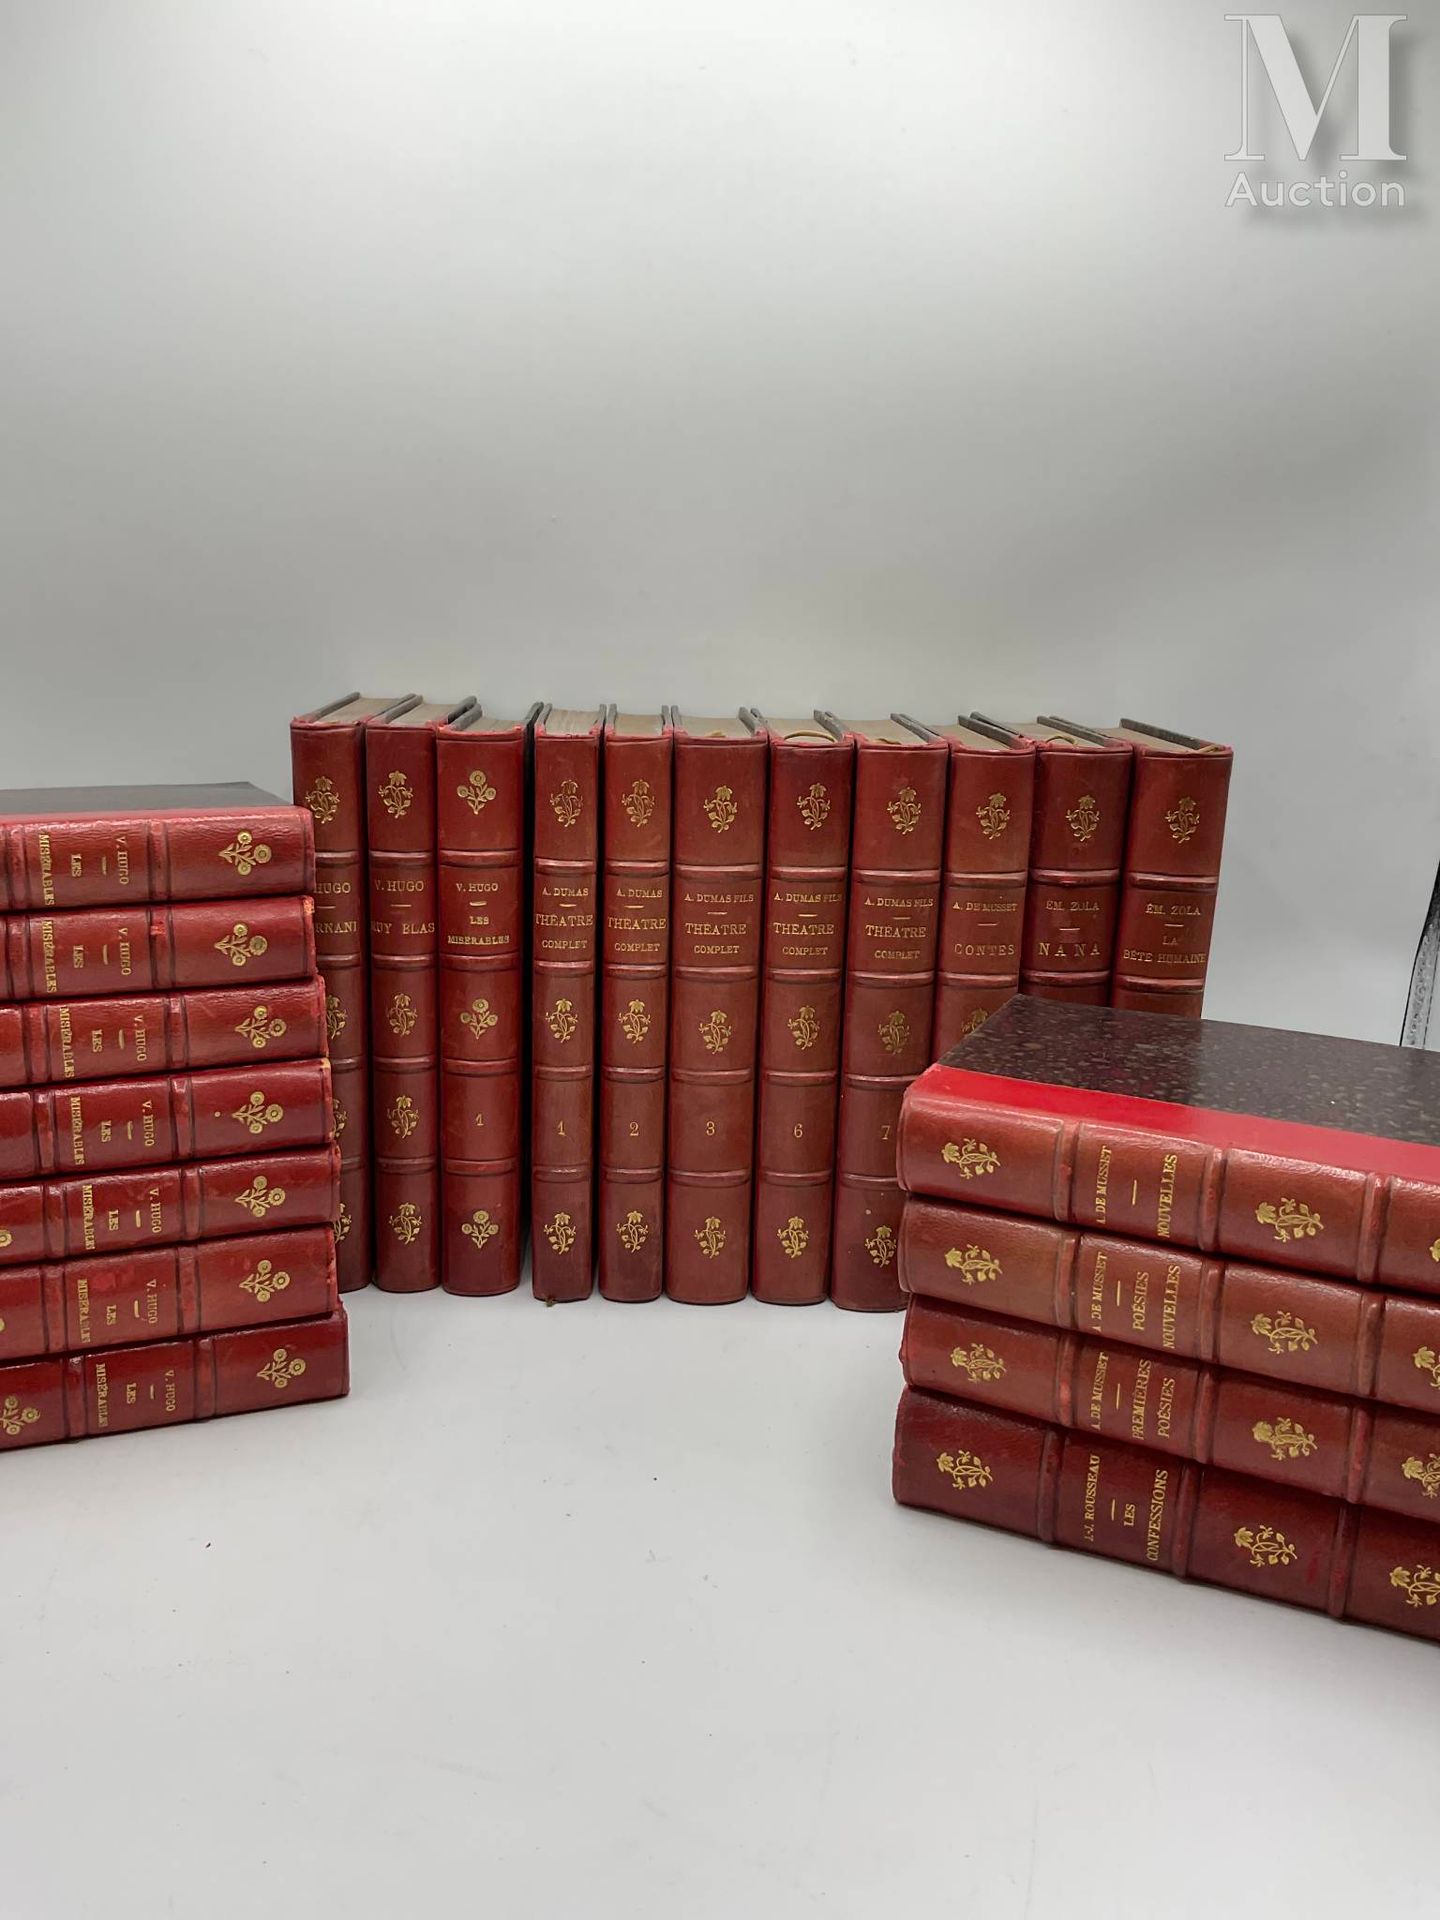 Bibliothèque Charpentier, 22 volumes - Nana, Emile Zola
- The Human Beast, Emile&hellip;